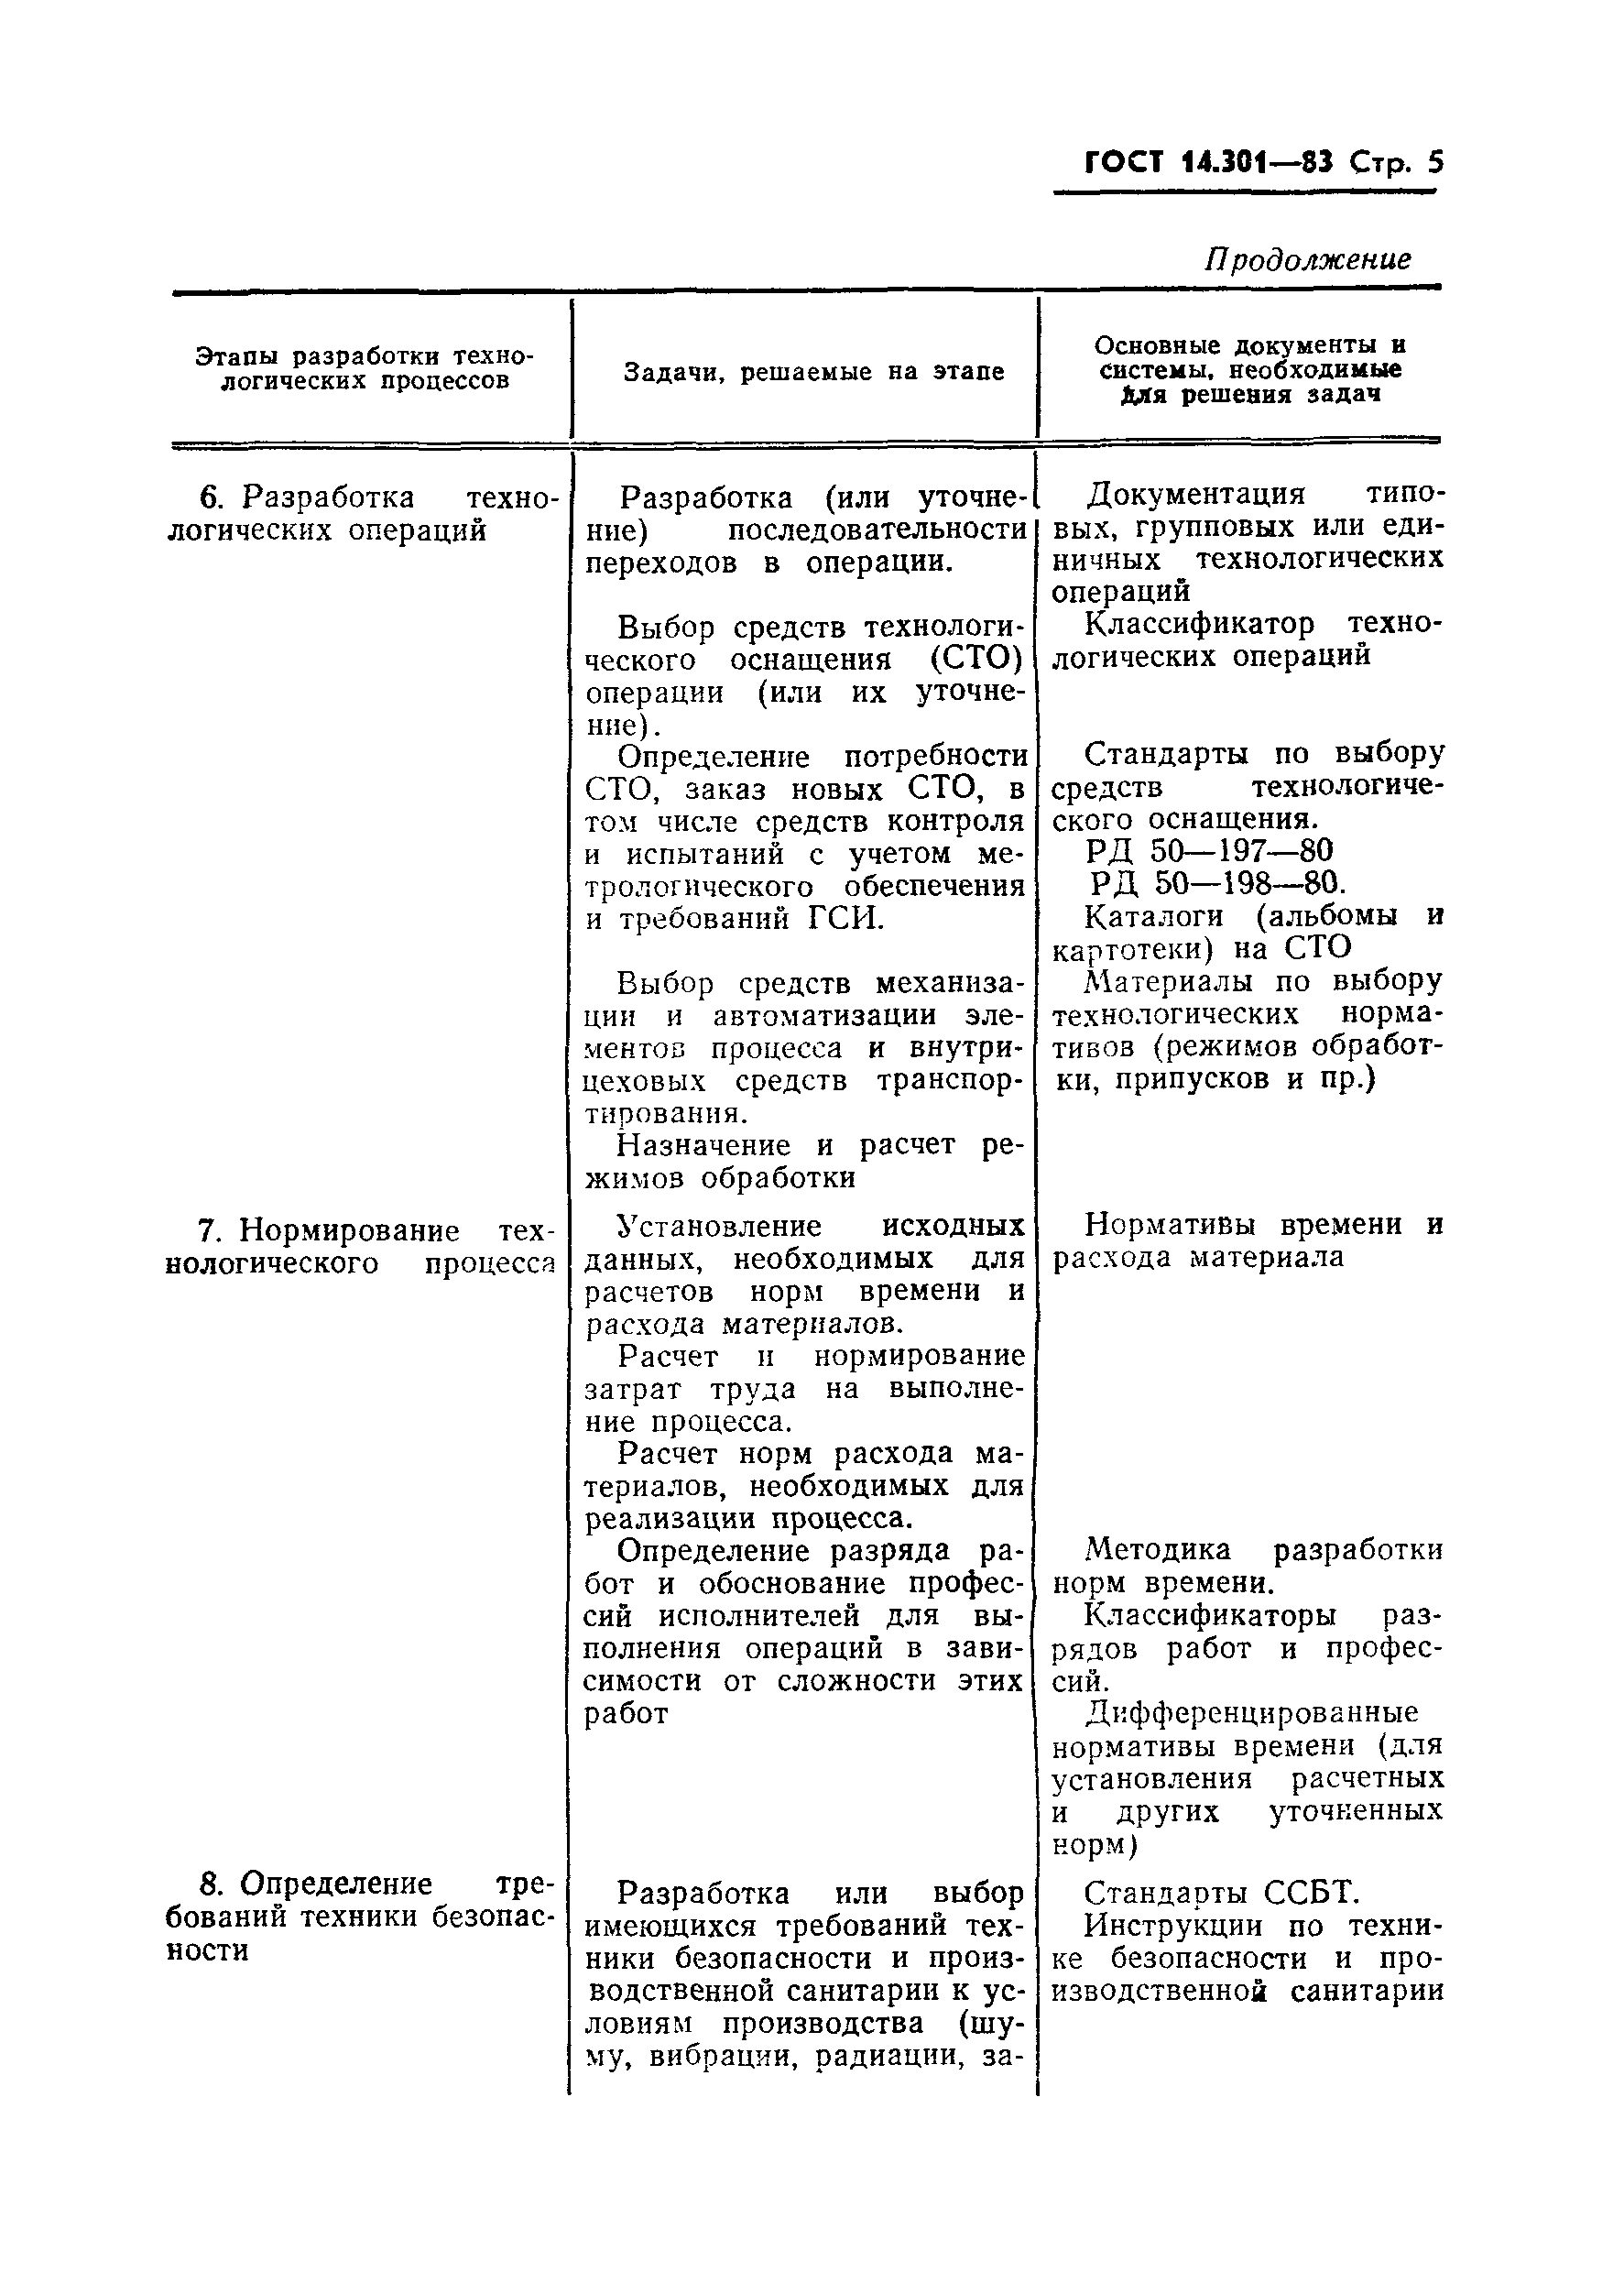 ГОСТ 14.301-83